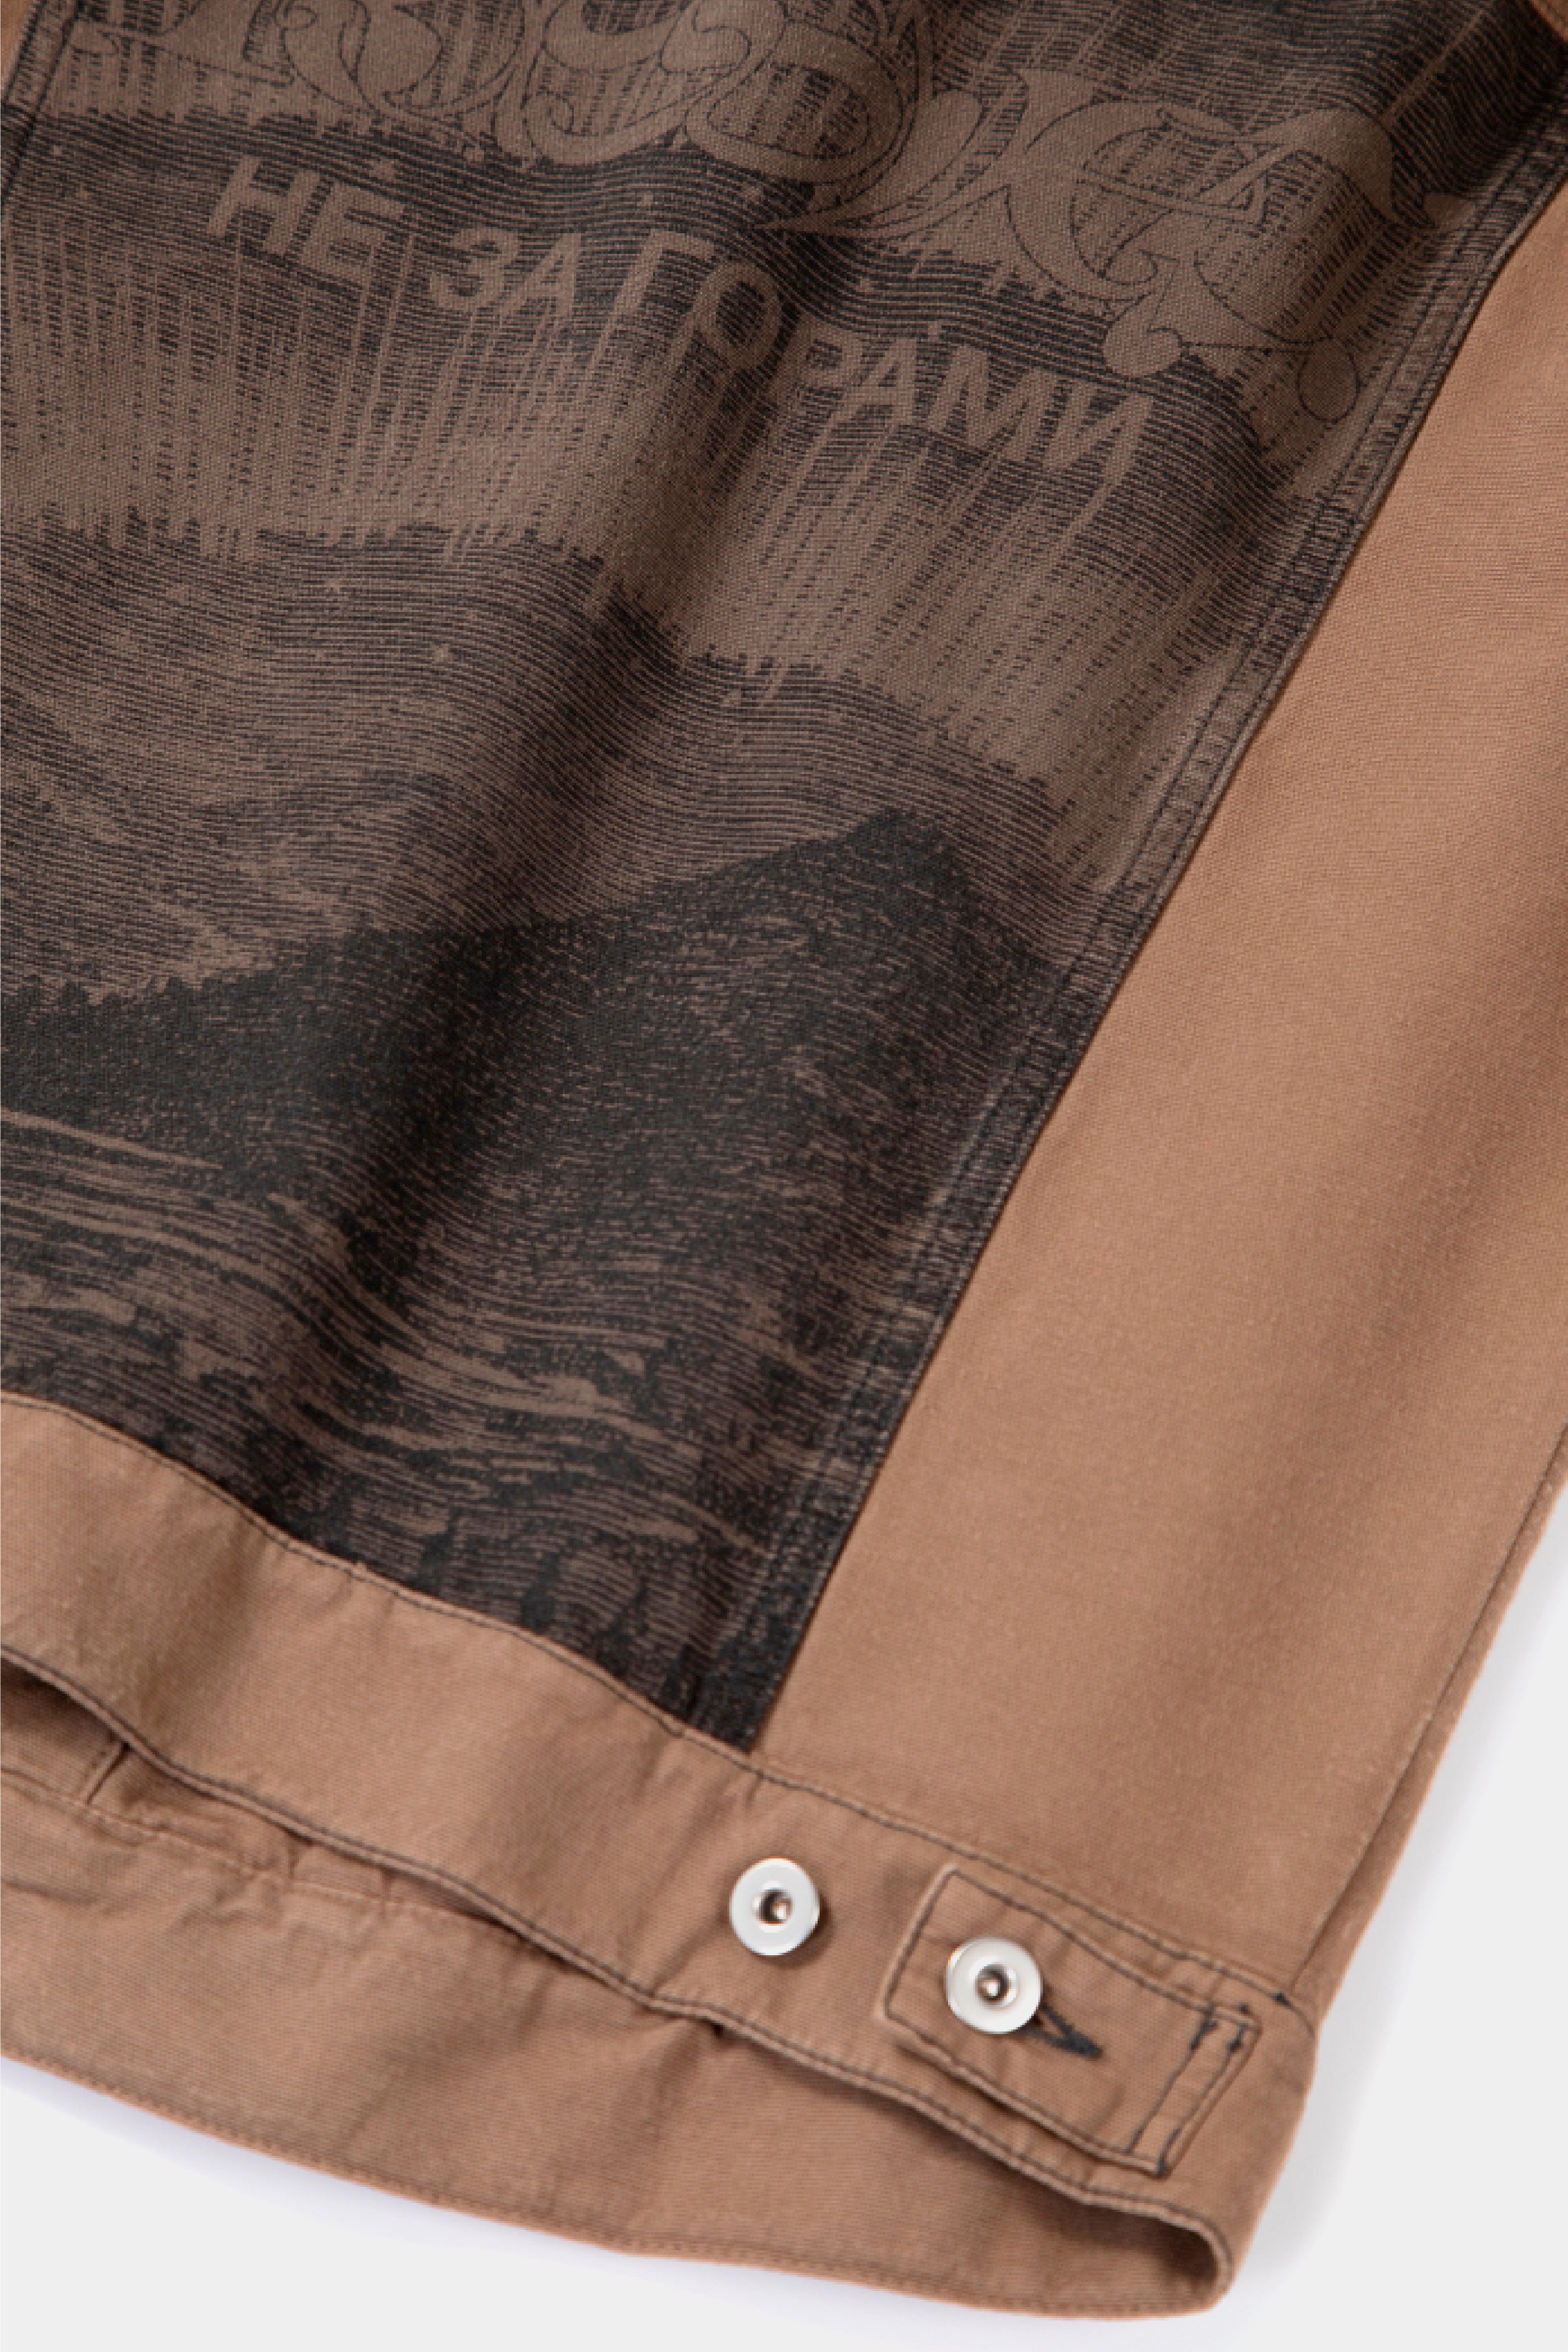 Selectshop FRAME - RASSVET Men Canvas Jacket Outerwear Dubai